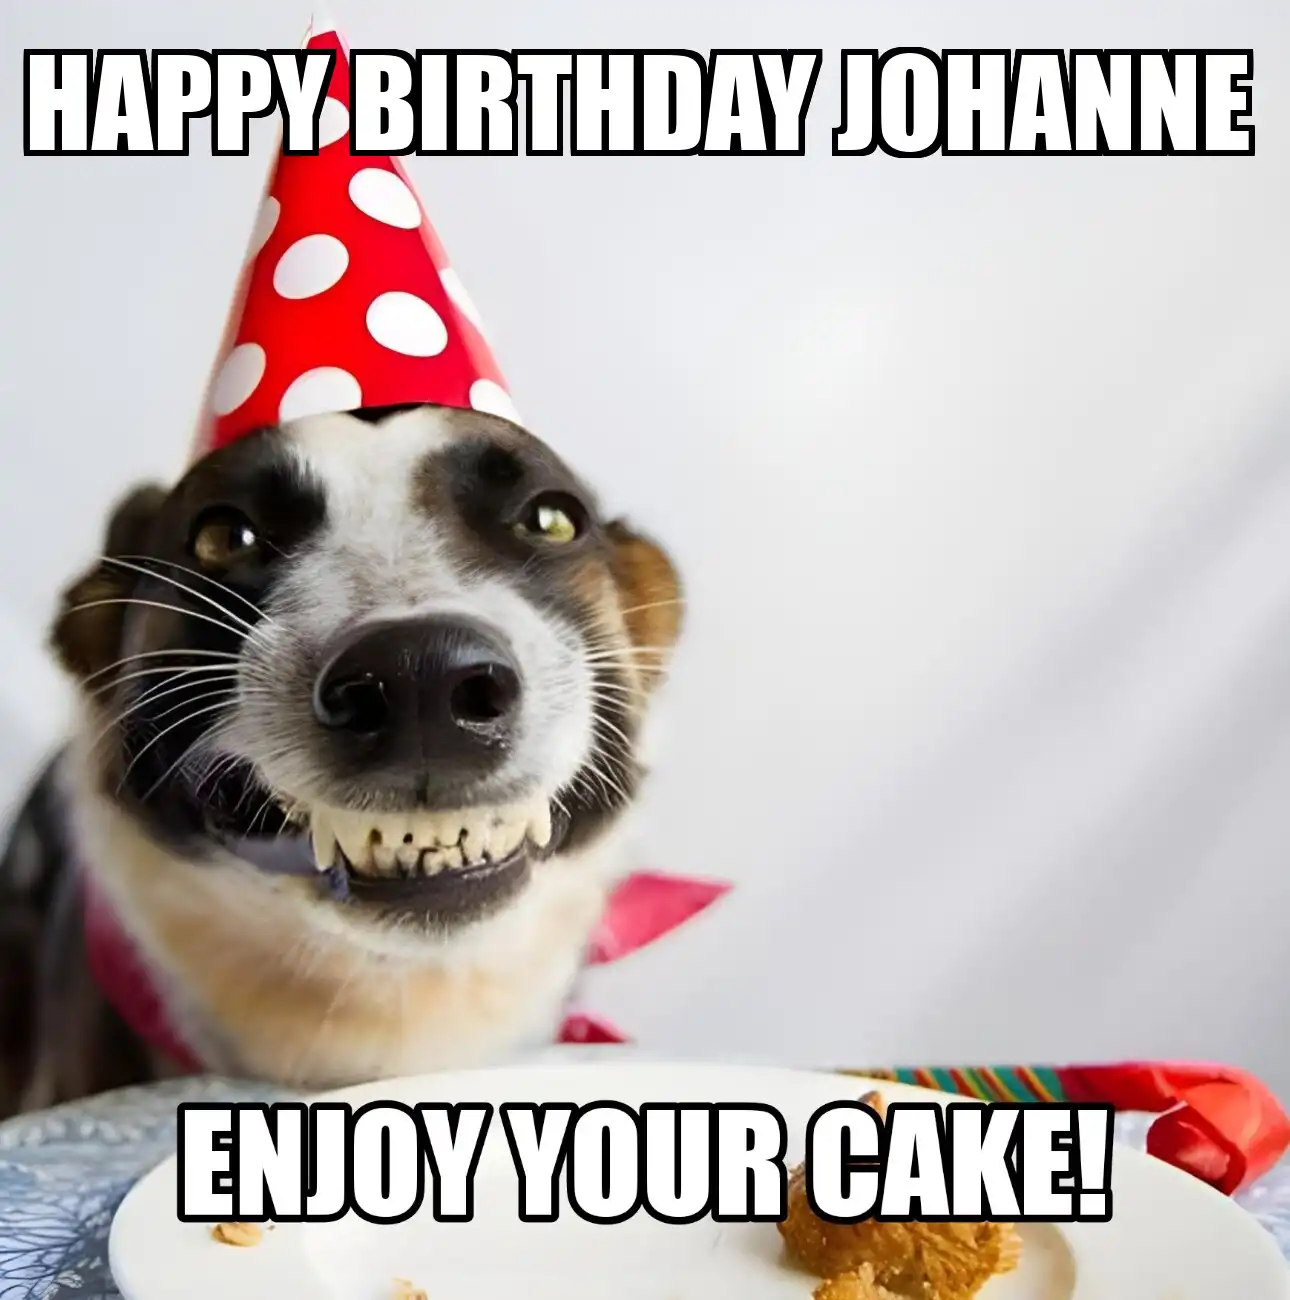 Happy Birthday Johanne Enjoy Your Cake Dog Meme